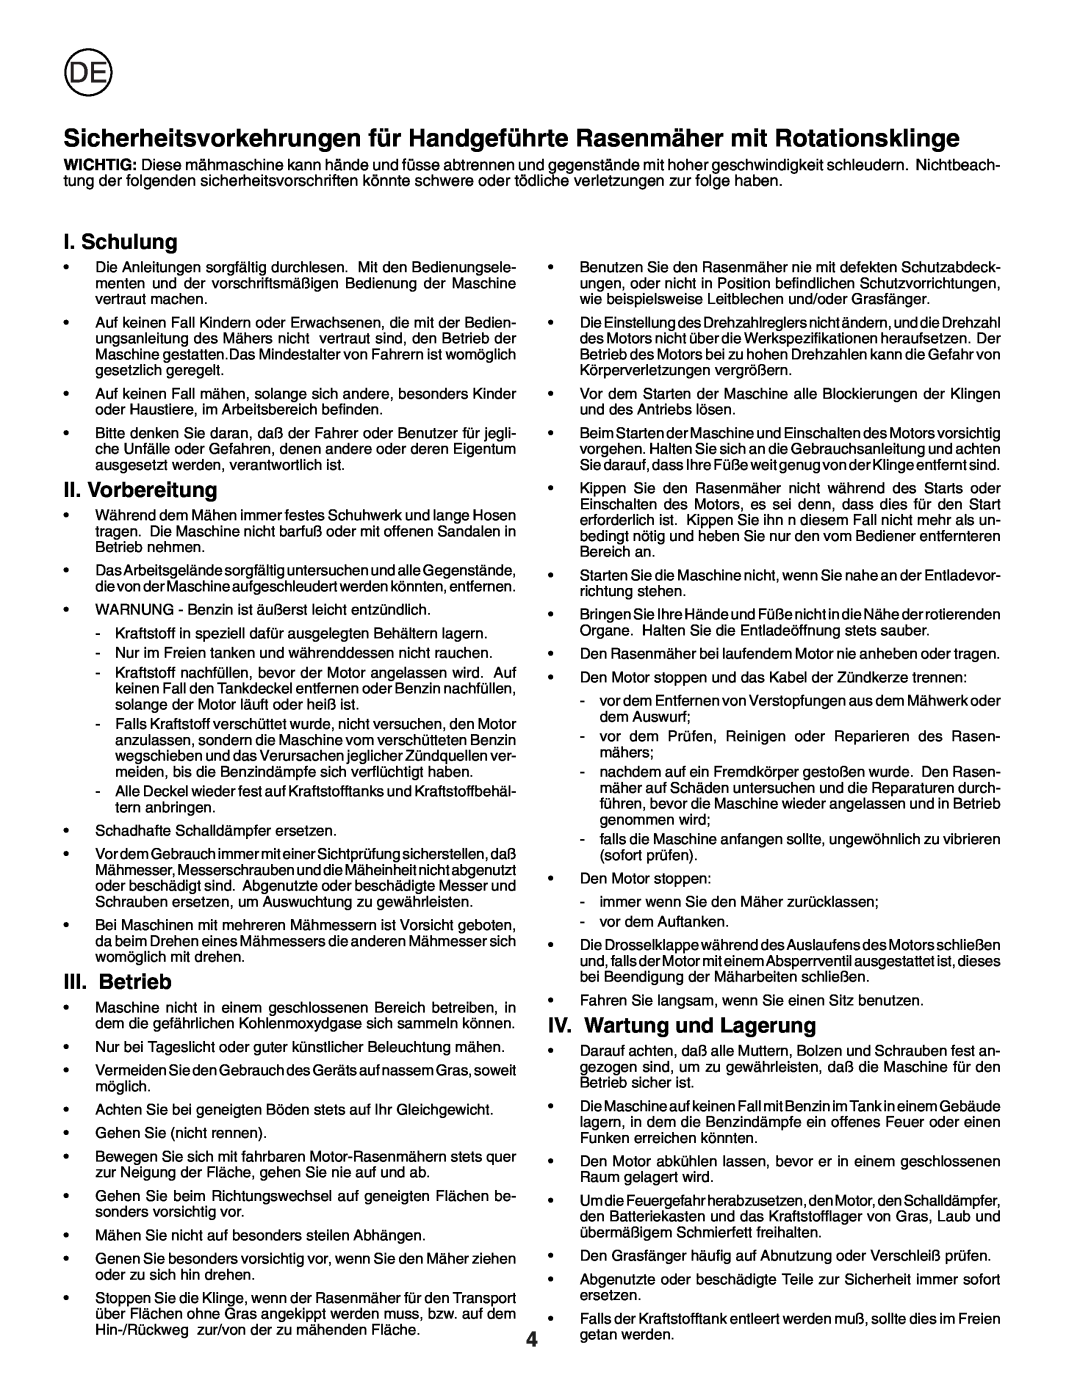 Husqvarna R53SVW instruction manual I. Schulung, II. Vorbereitung, III. Betrieb, IV. Wartung und Lagerung 